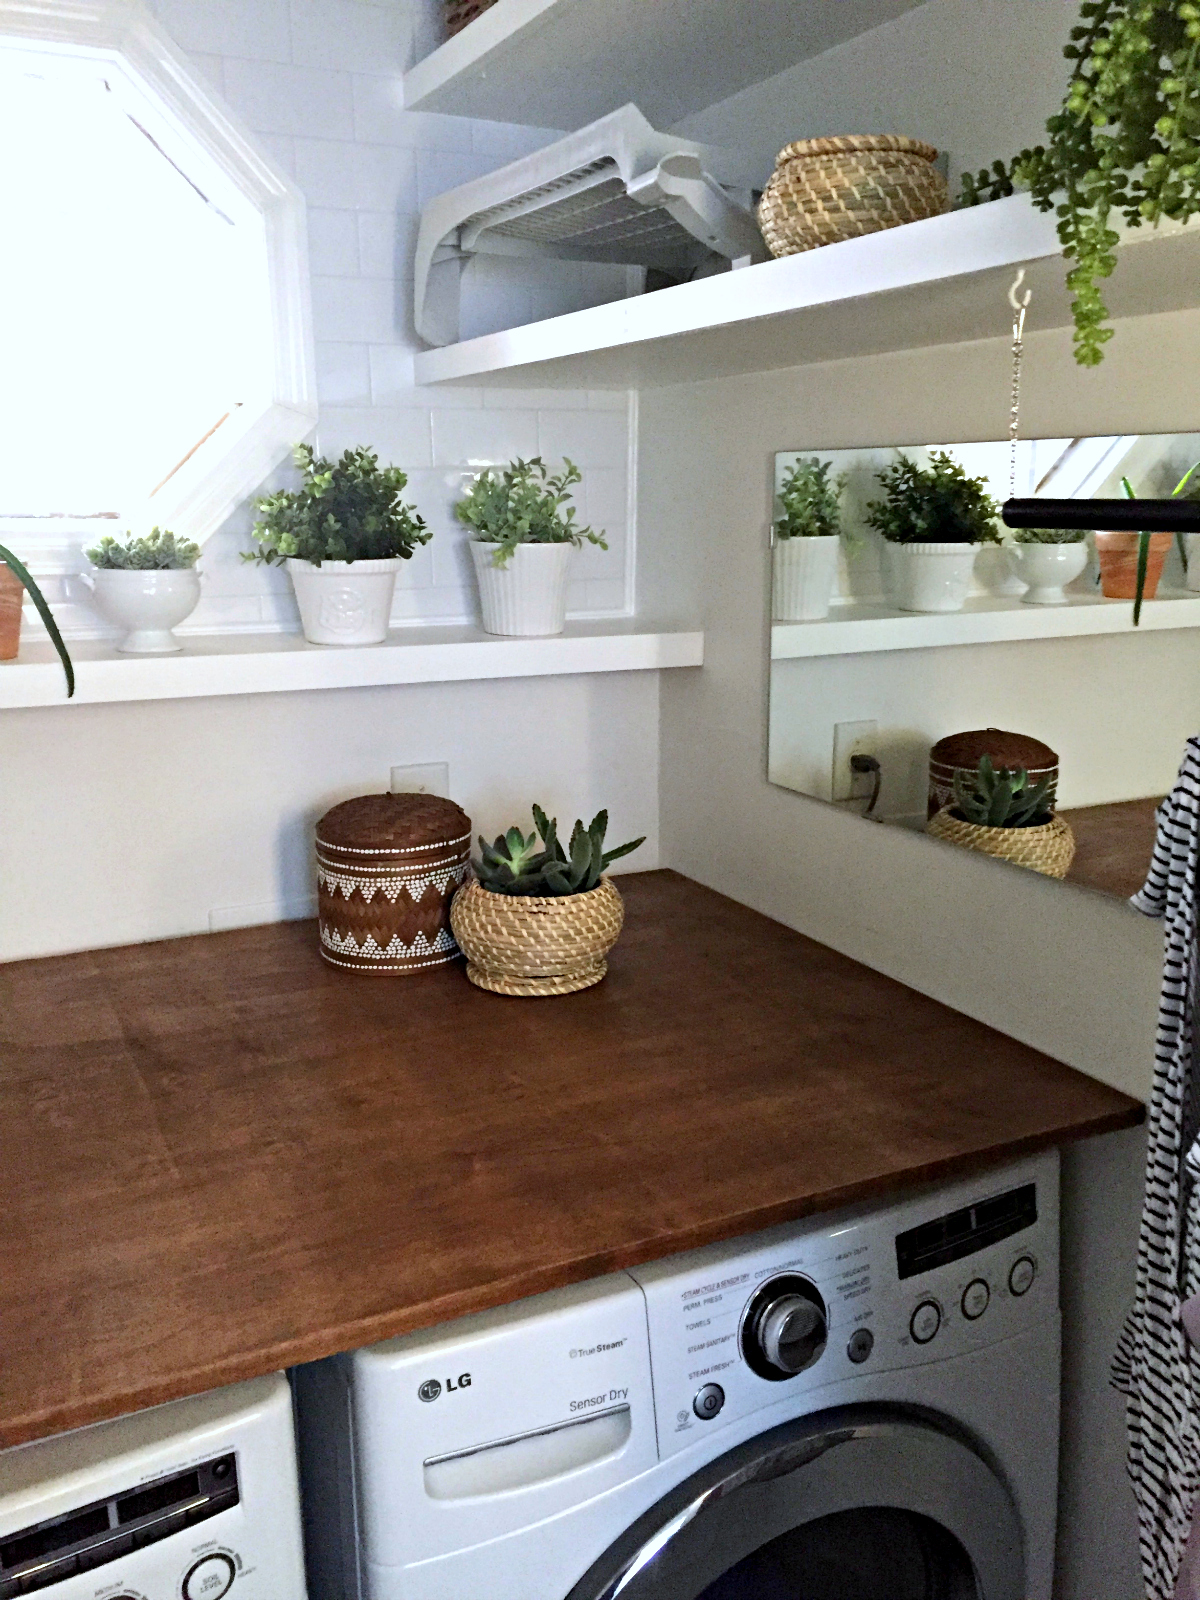 DIY Laundry Countertop - You Can DIY Blog